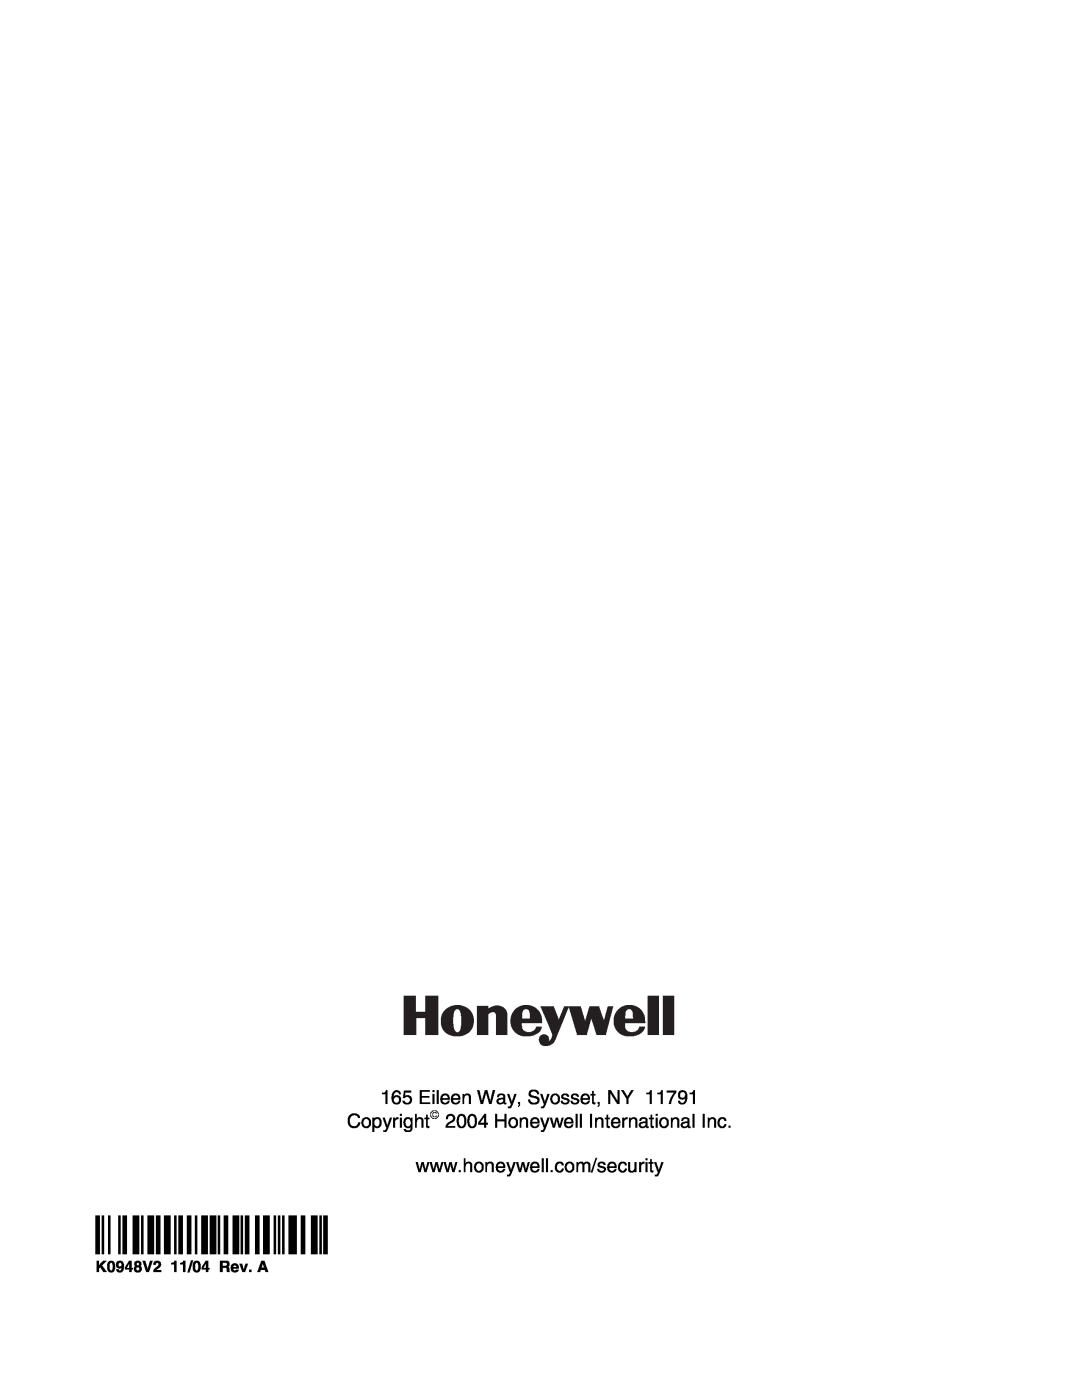 Honeywell Optiflex ÊK0948V2pŠ, Eileen Way, Syosset, NY, Copyright 2004 Honeywell International Inc, K0948V2 11/04 Rev. A 